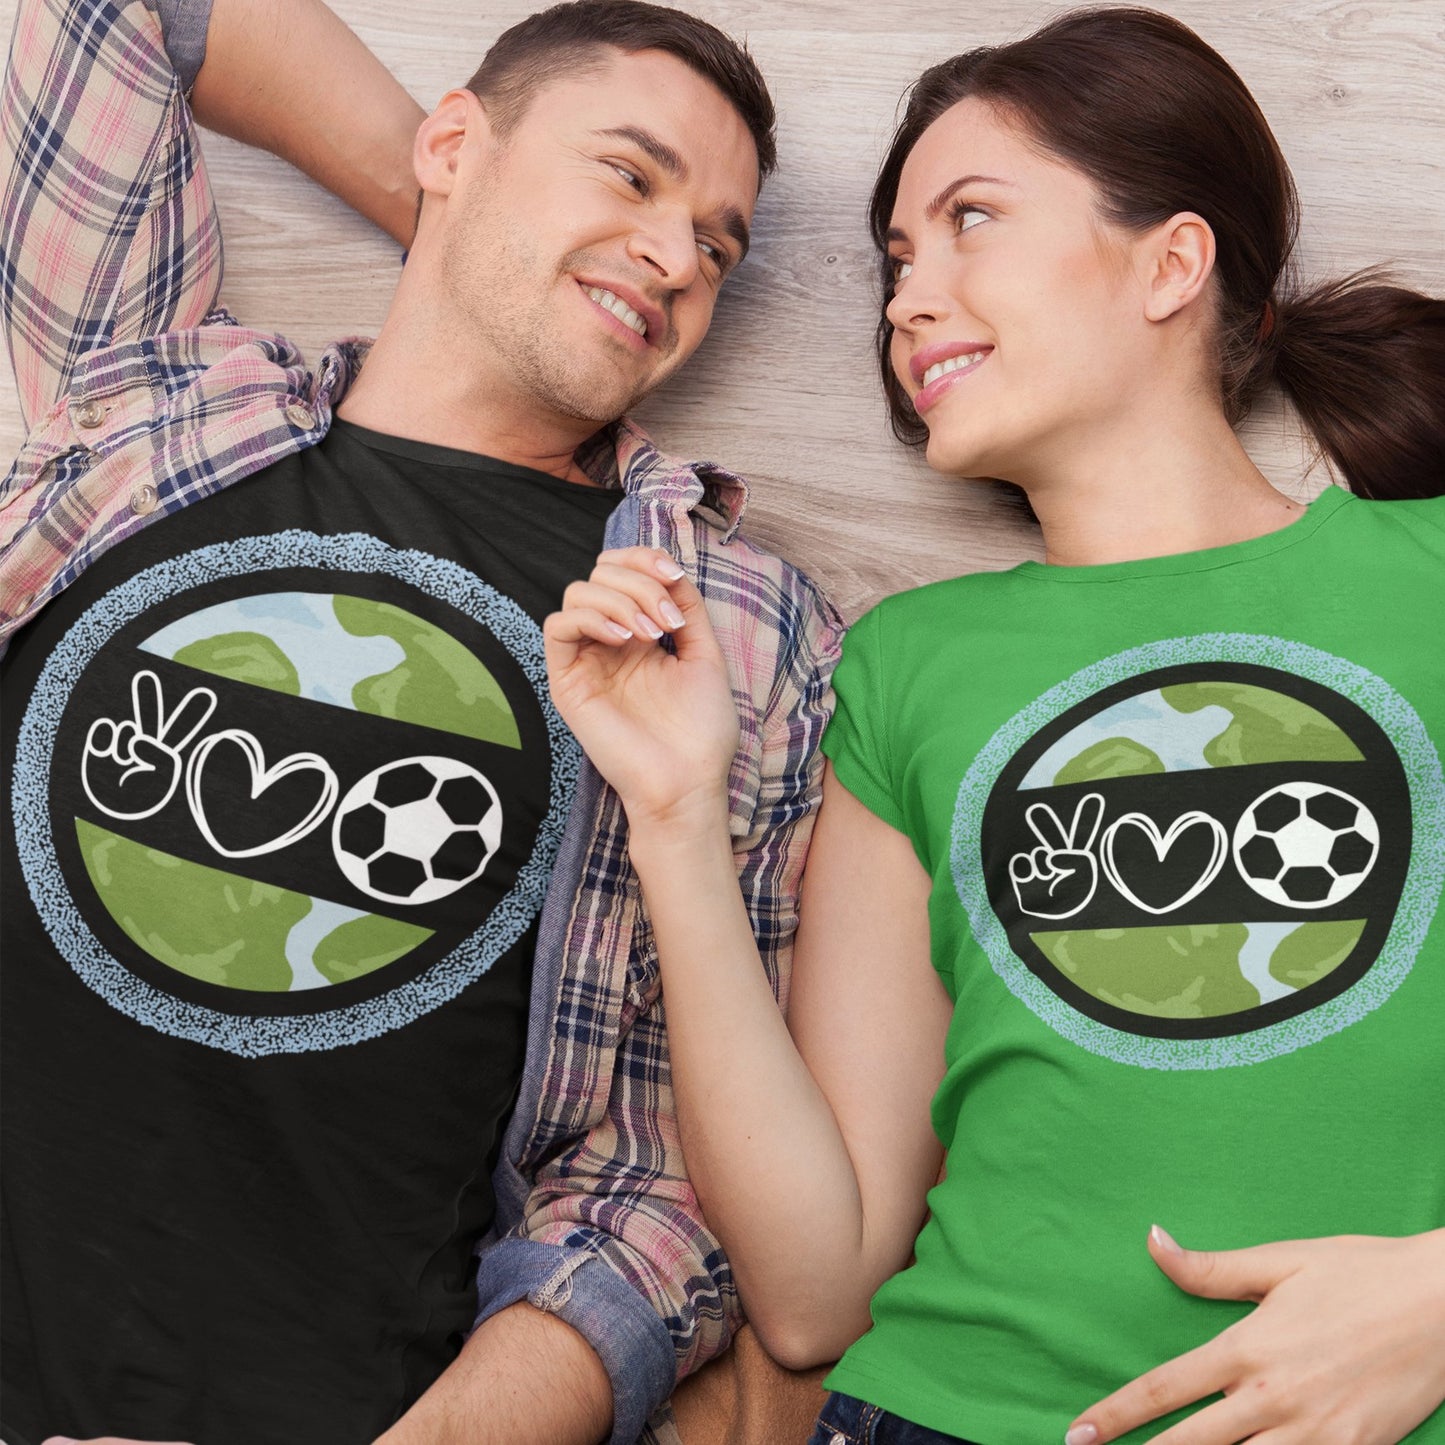 Peace, Love, and Soccer World Symbols Unisex Tee - Global Football Enthusiast Shirt - Eddy and Rita